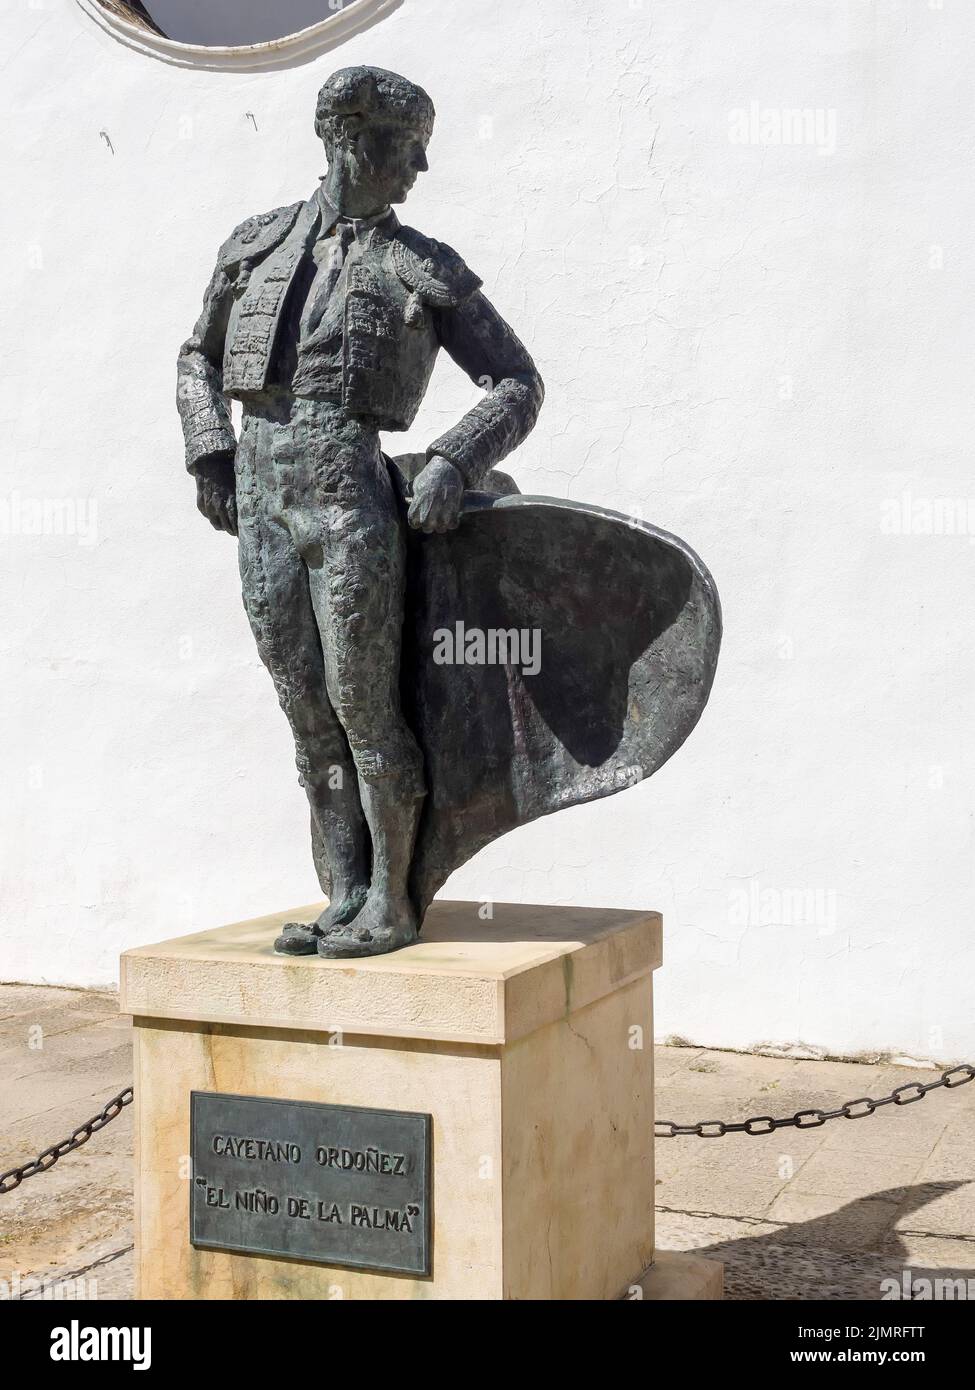 RONDA, ANDALUCIA/ESPAÑA - MAYO 8 : Estatua del torero Cayetano Ordonez El niño de la Palma en Ronda Andalucía España el 8 de mayo de 2 Foto de stock